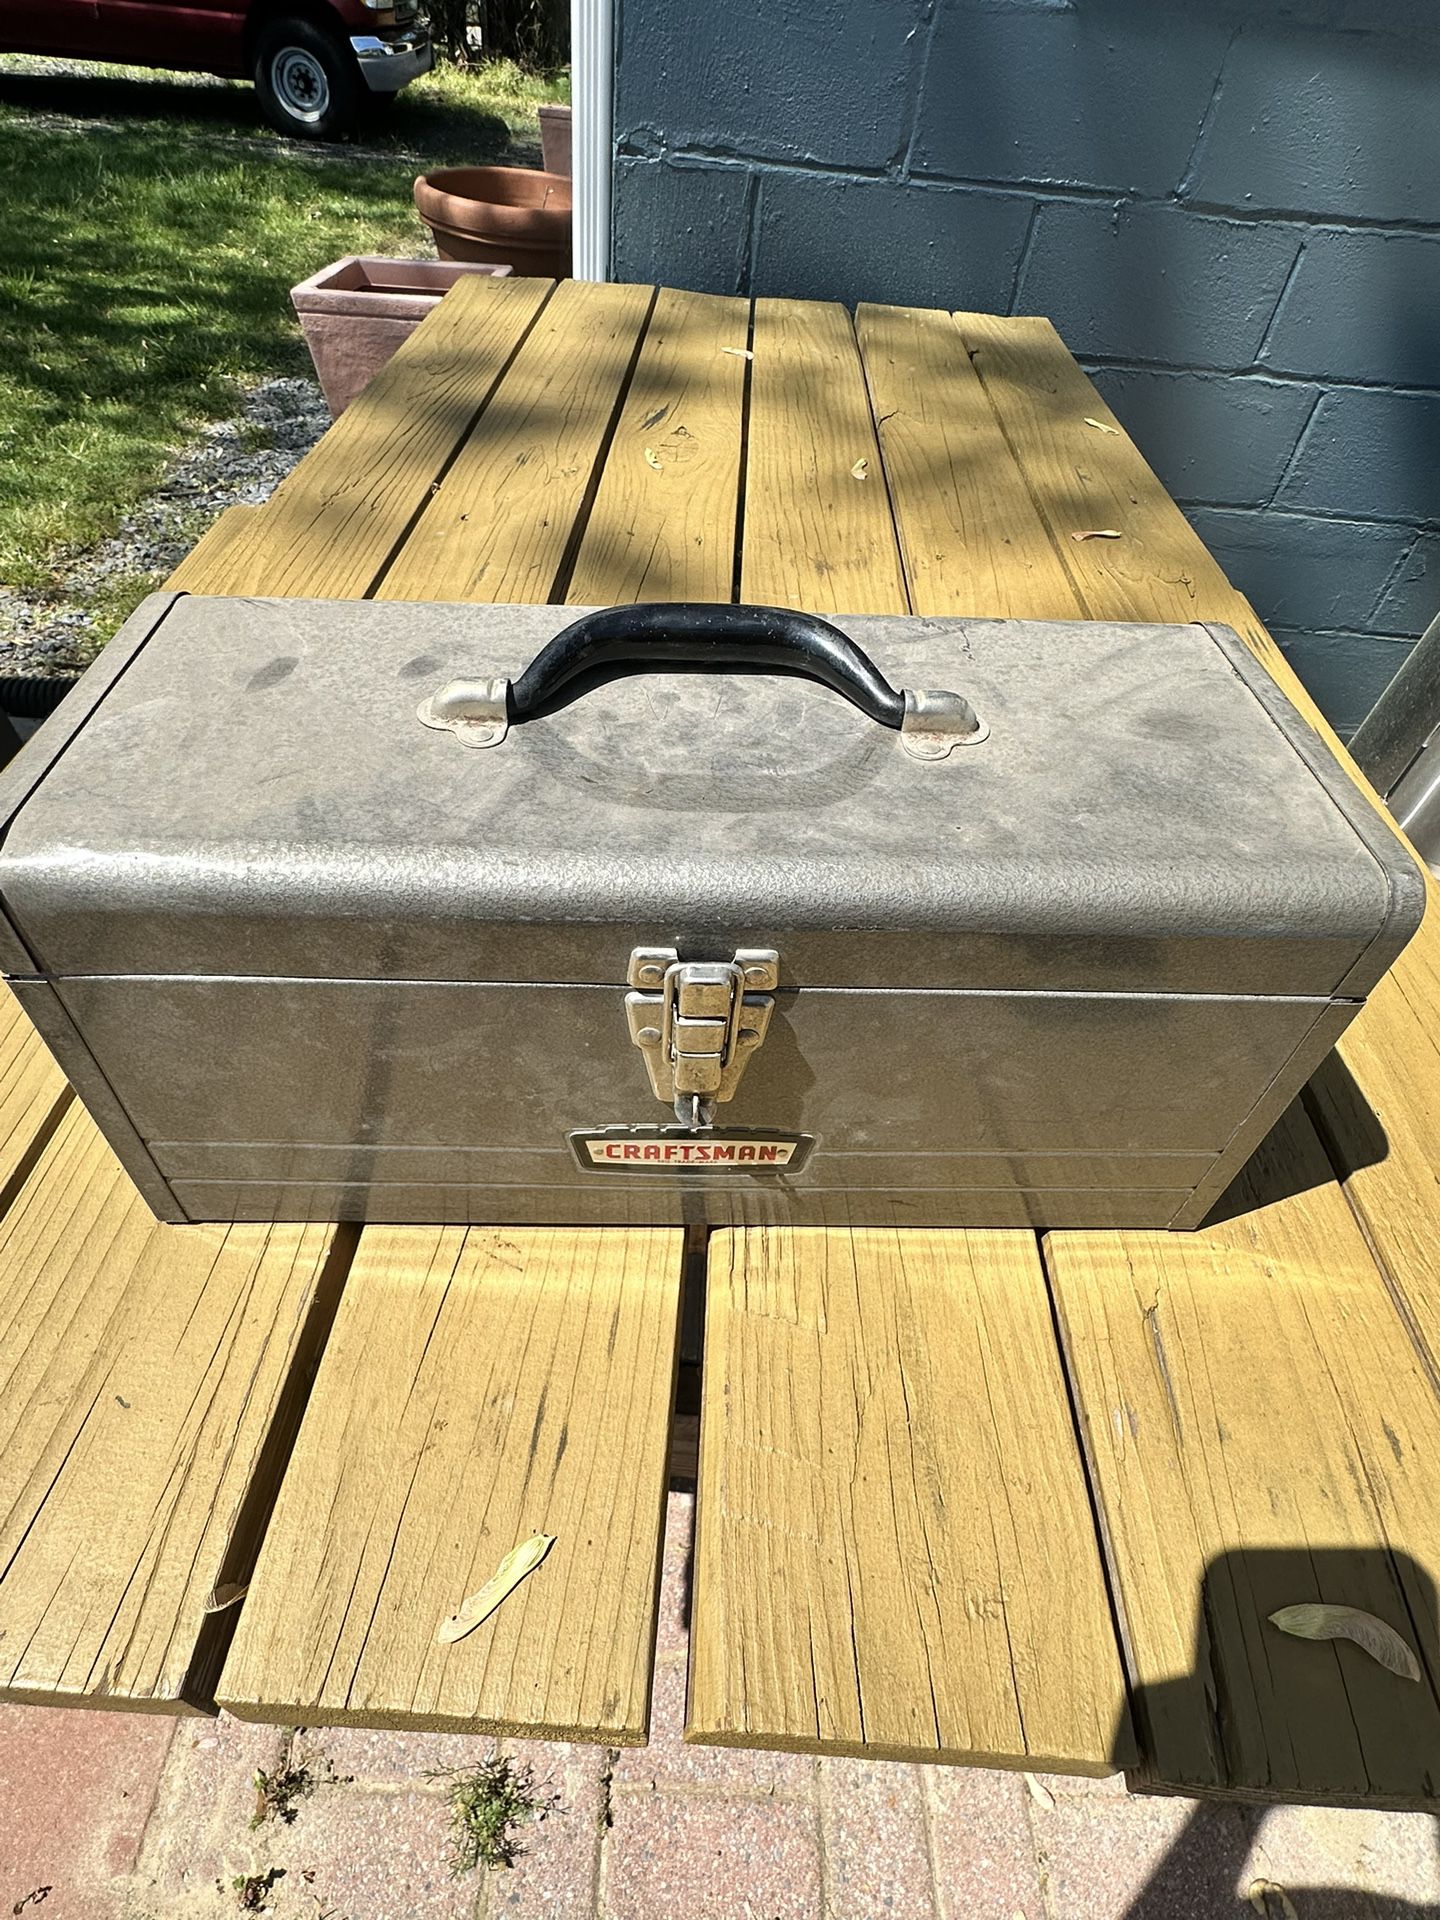 Craftsman Tool Box 